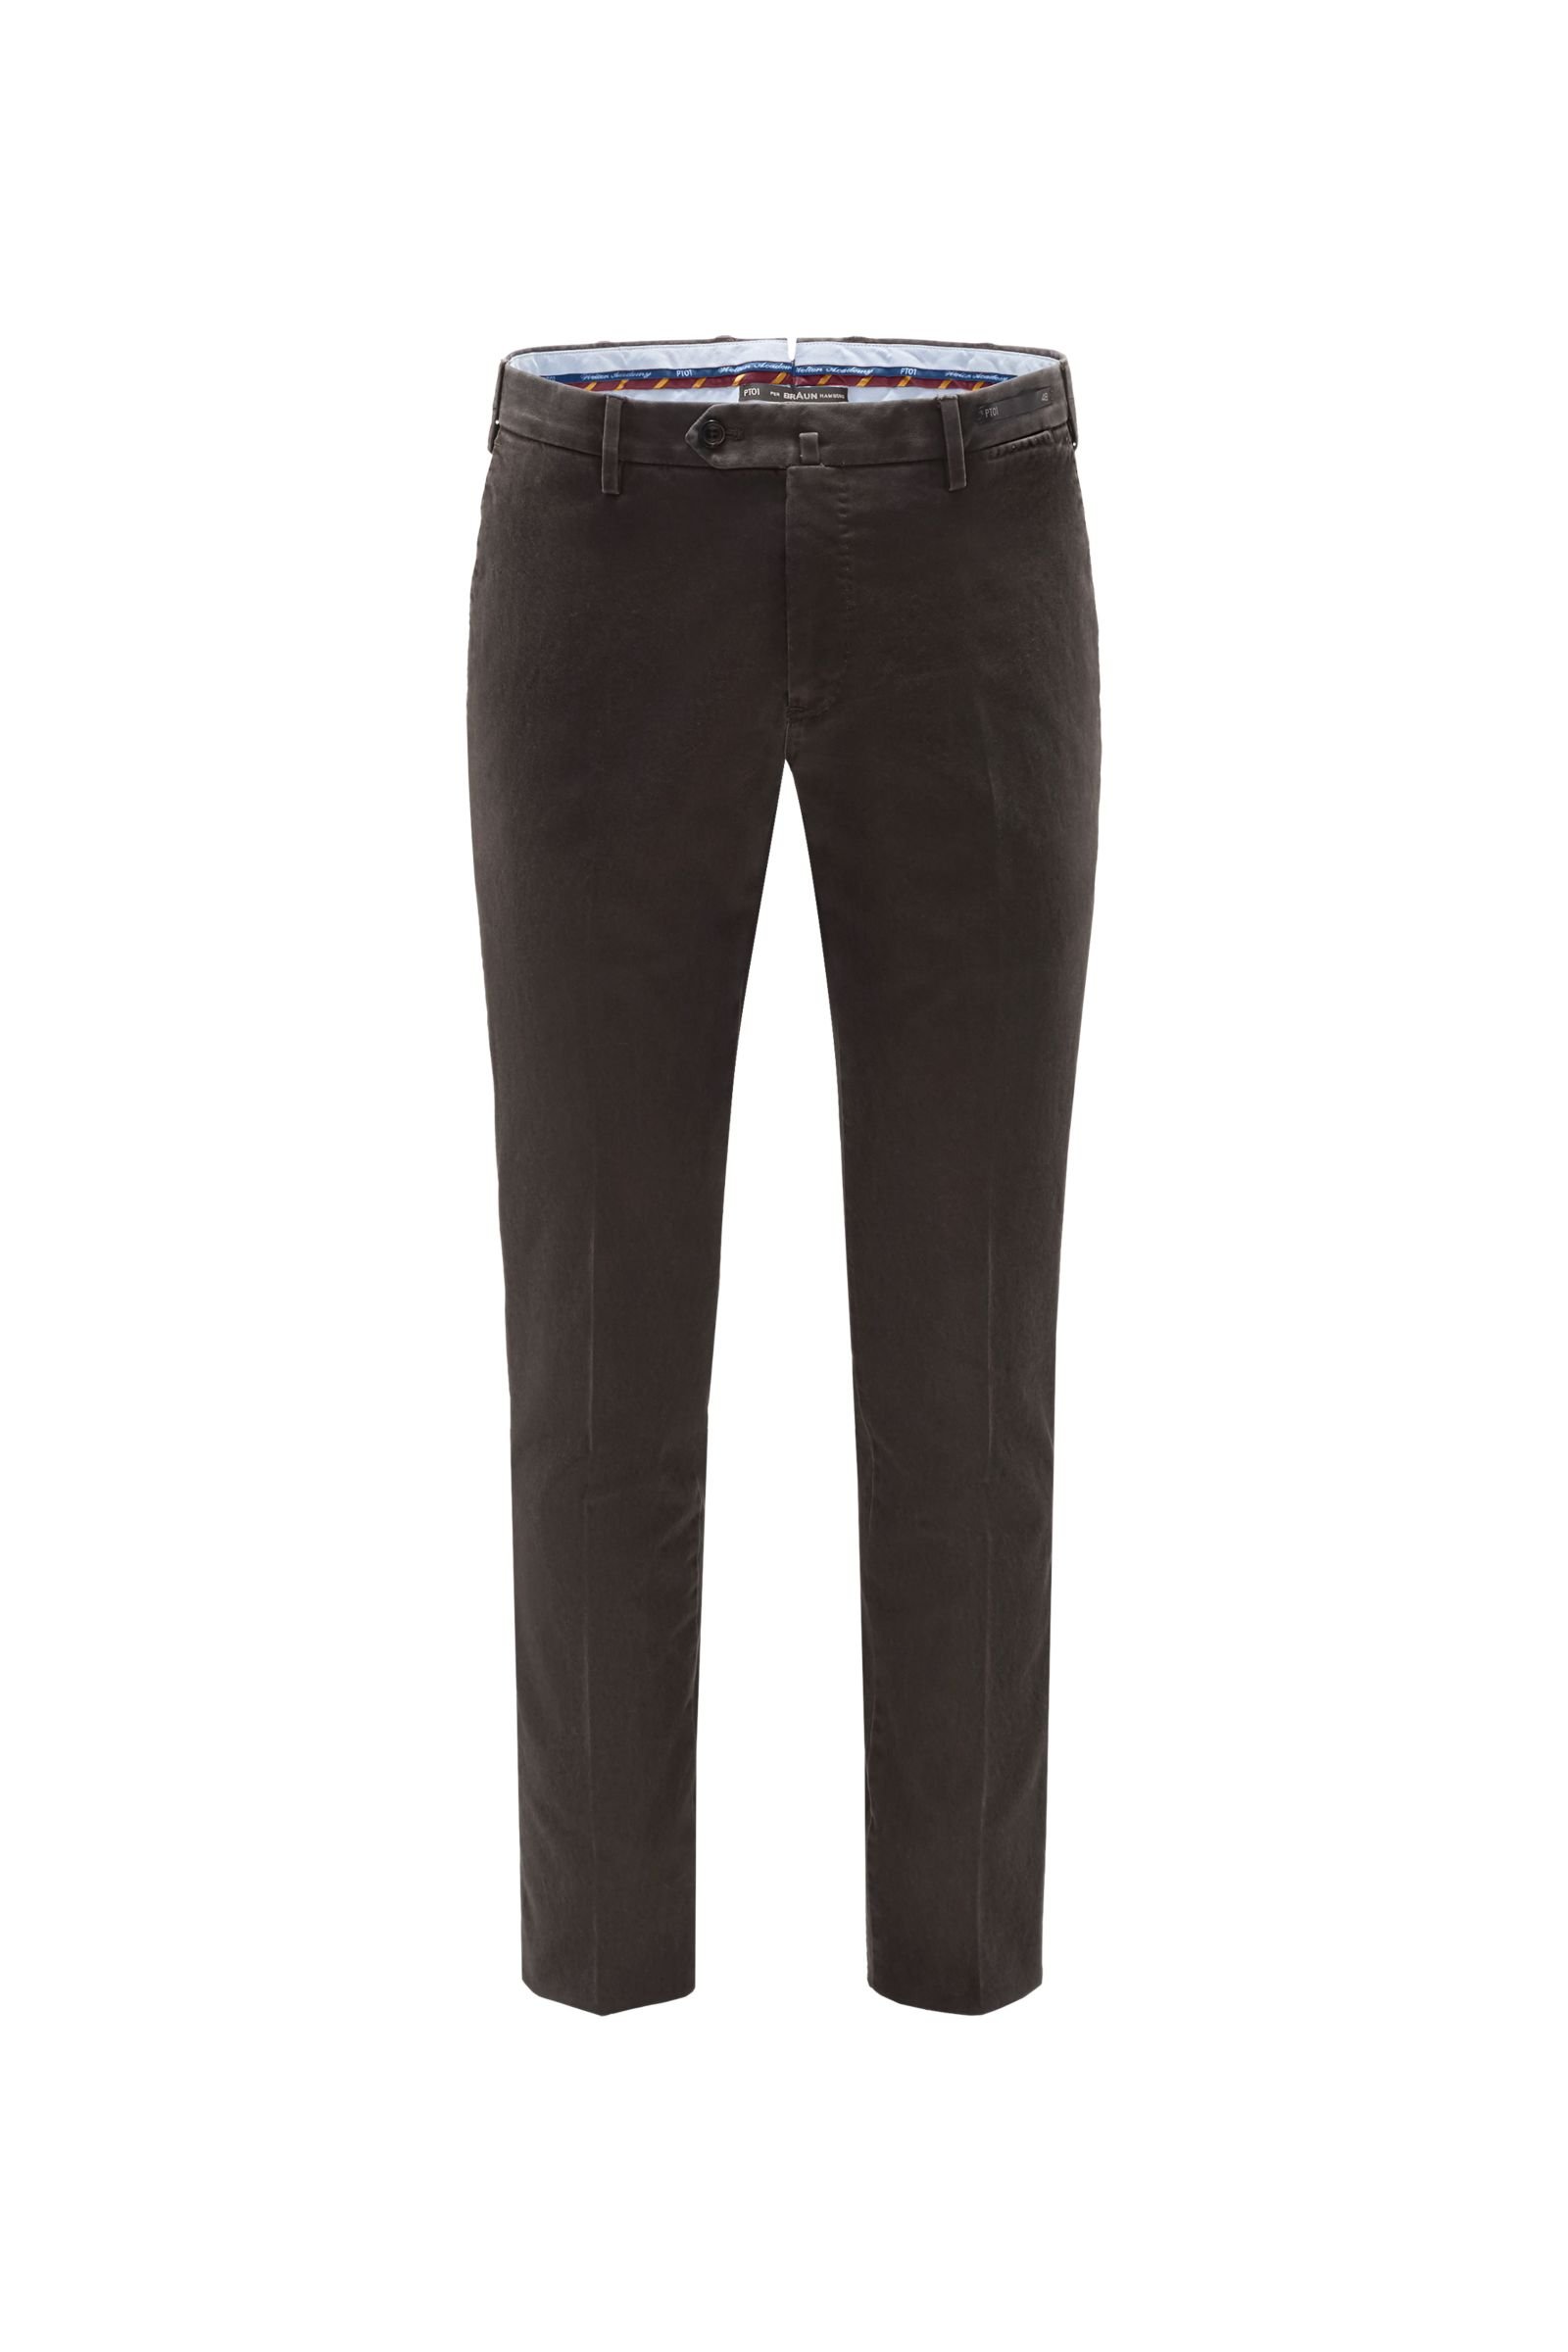 Cotton trousers 'Welton Academy Evo Fit' dark brown